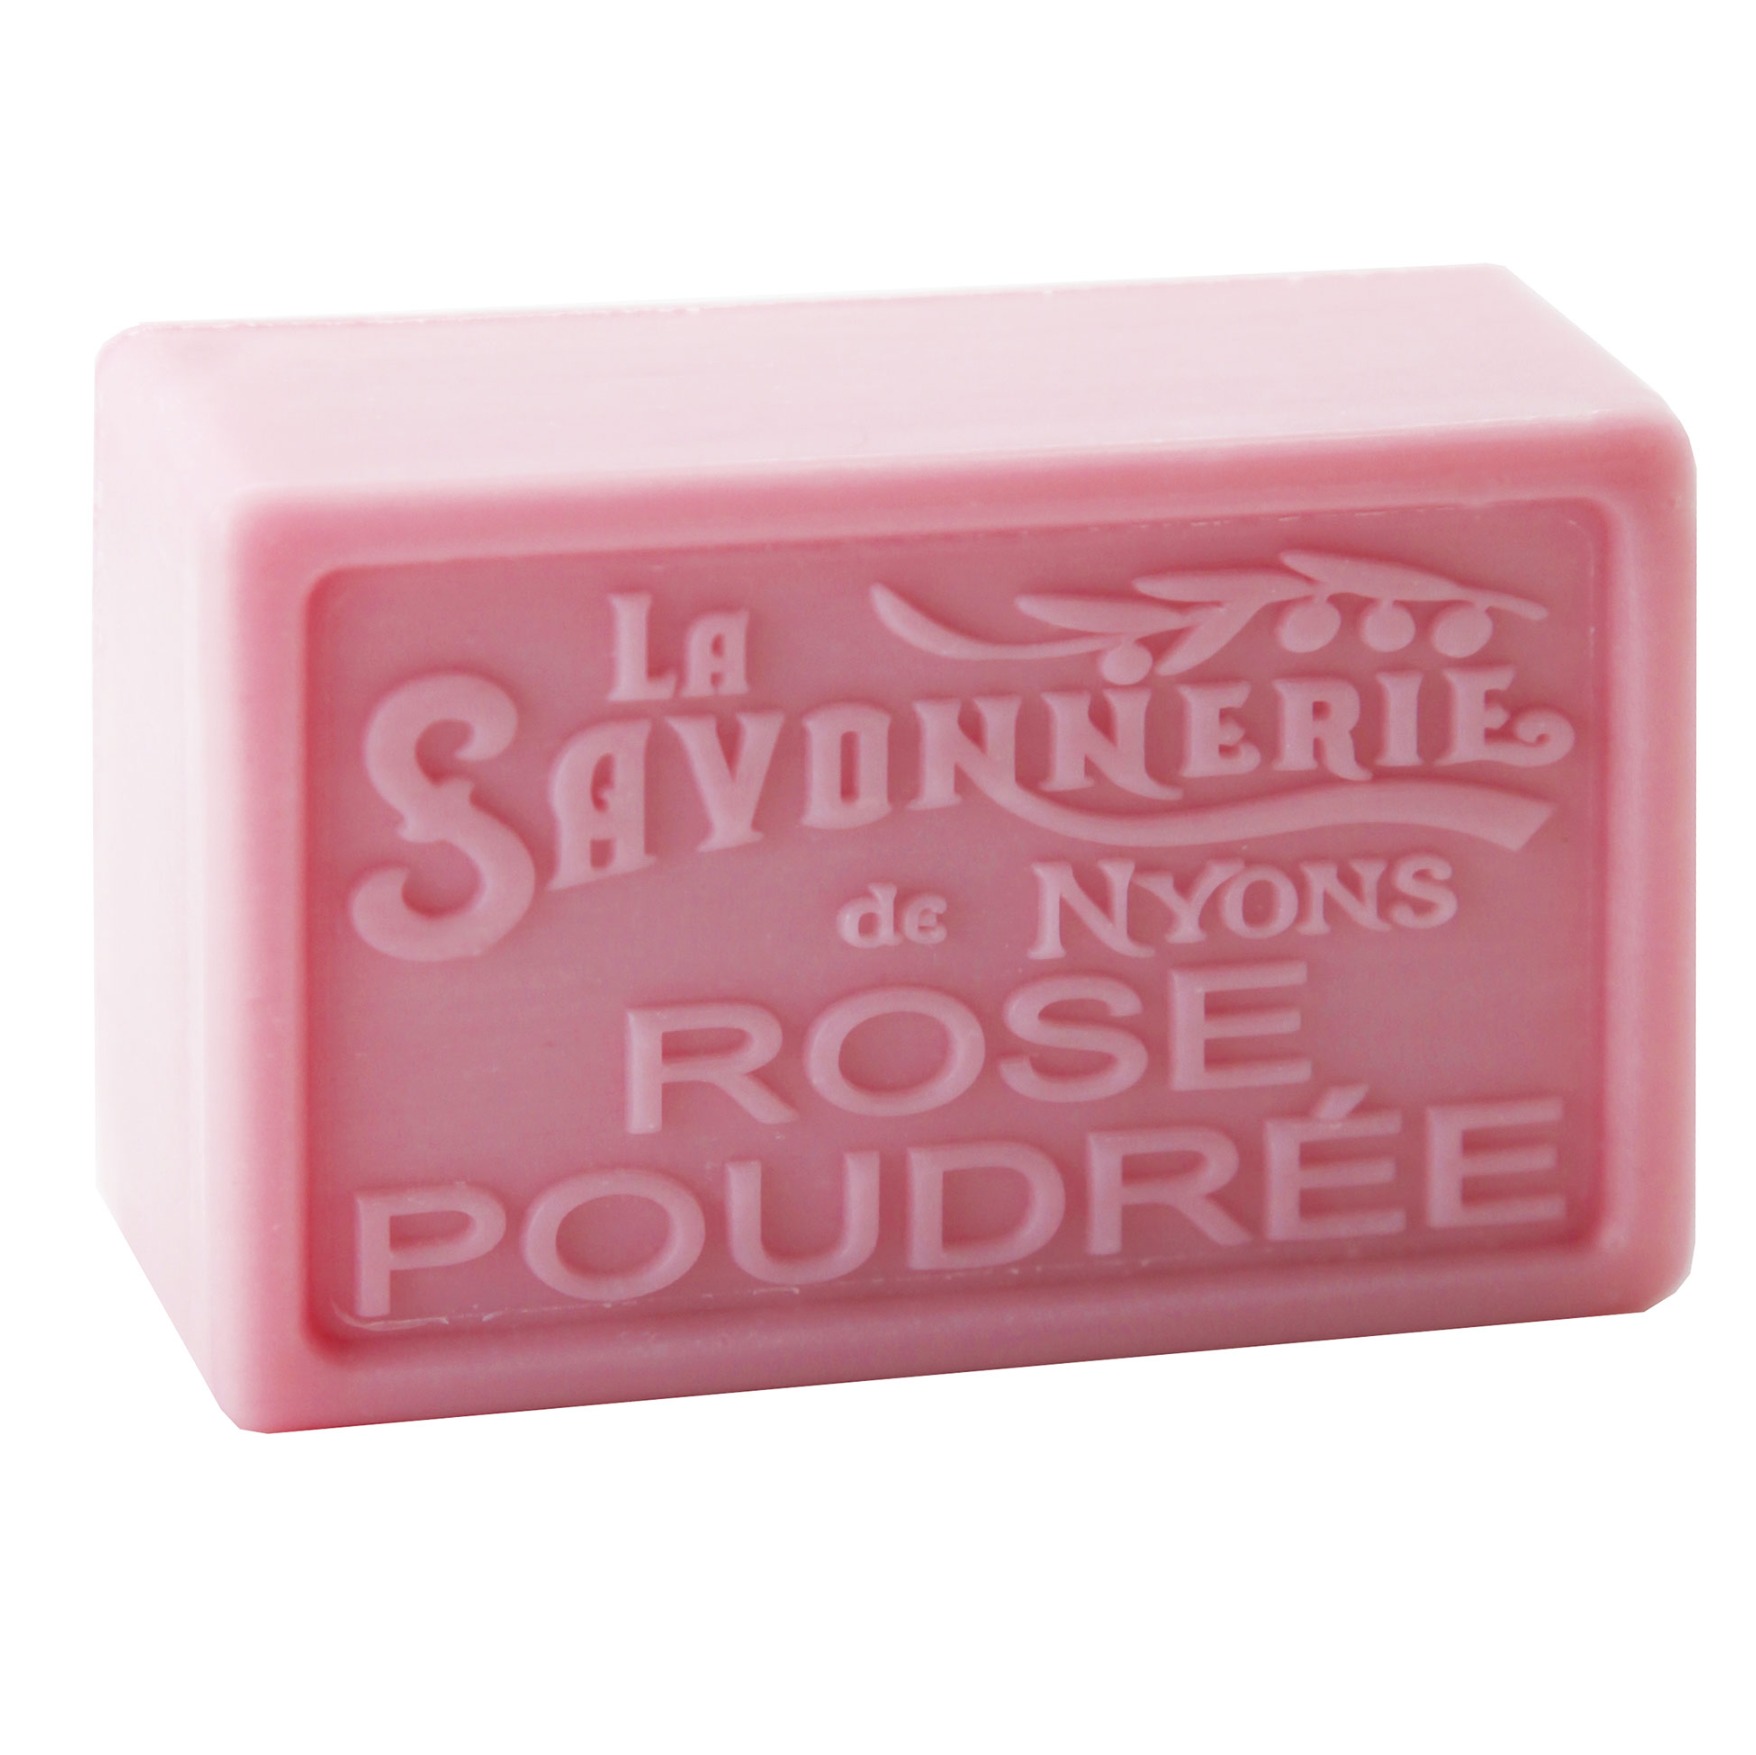 Powdery Rose Soap, 3.5oz